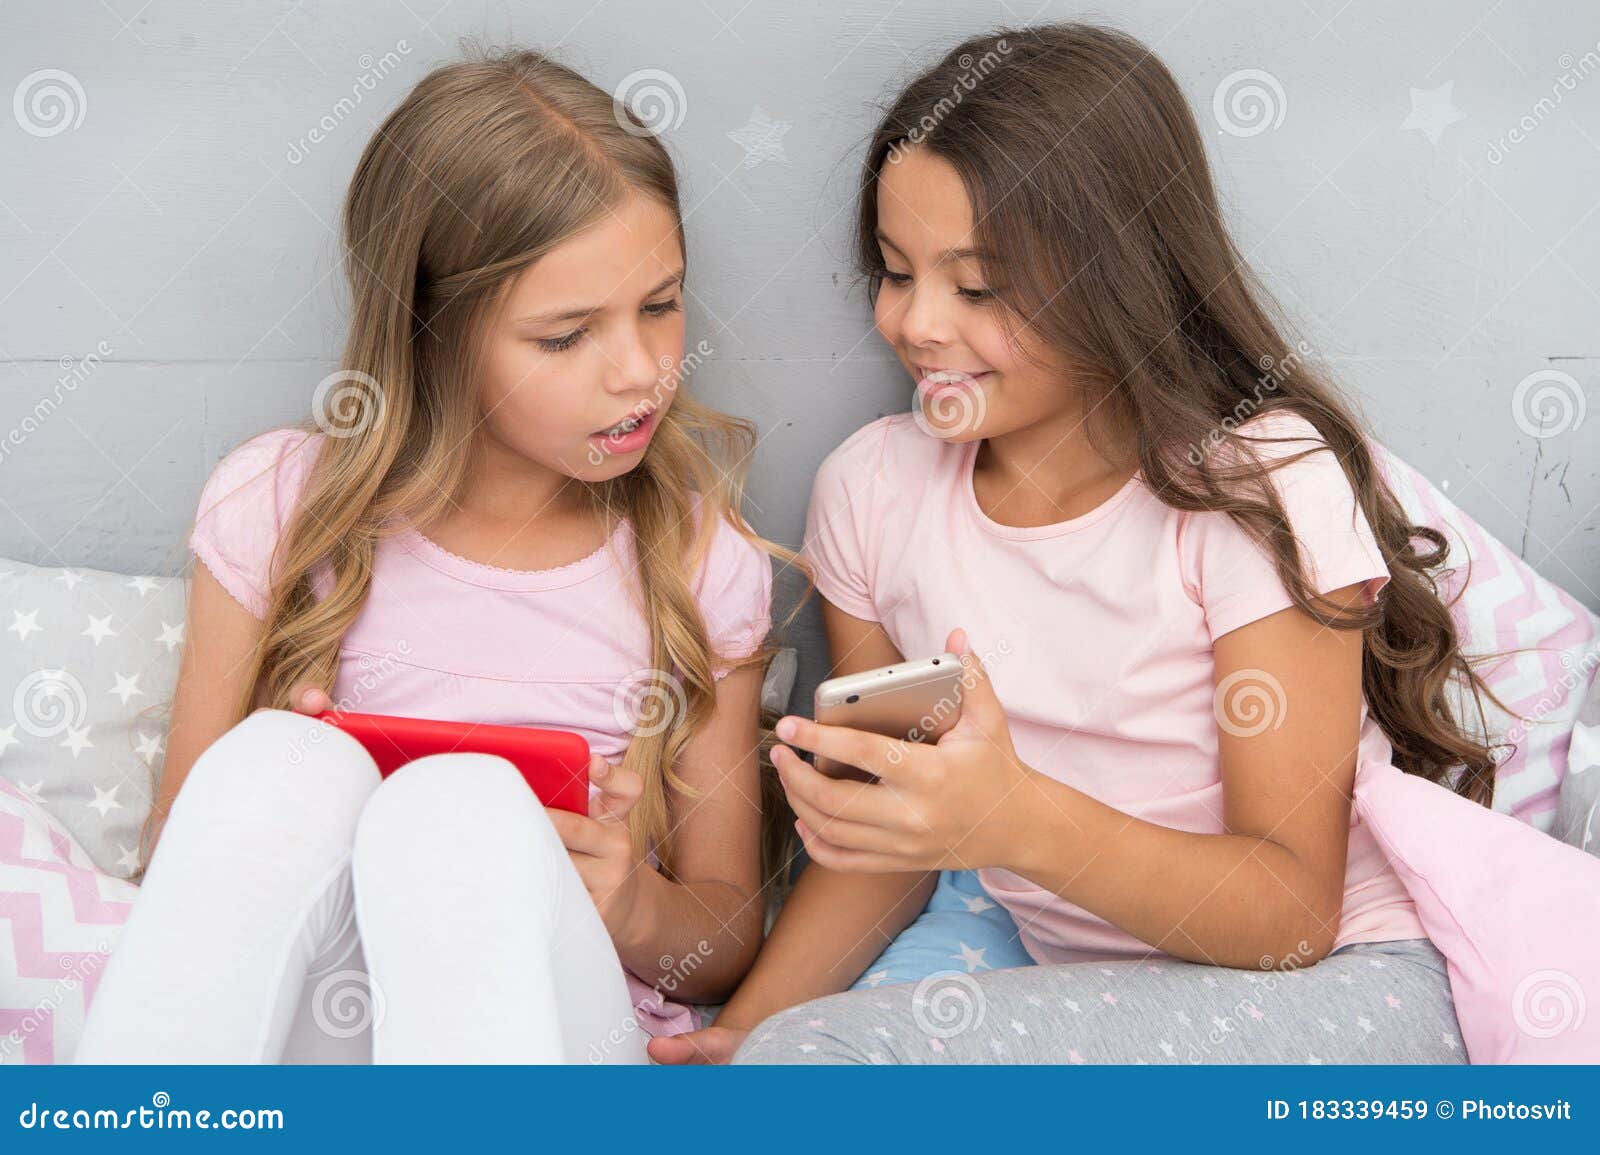 Online Social Network. Children and Technology. Mobile Application ...